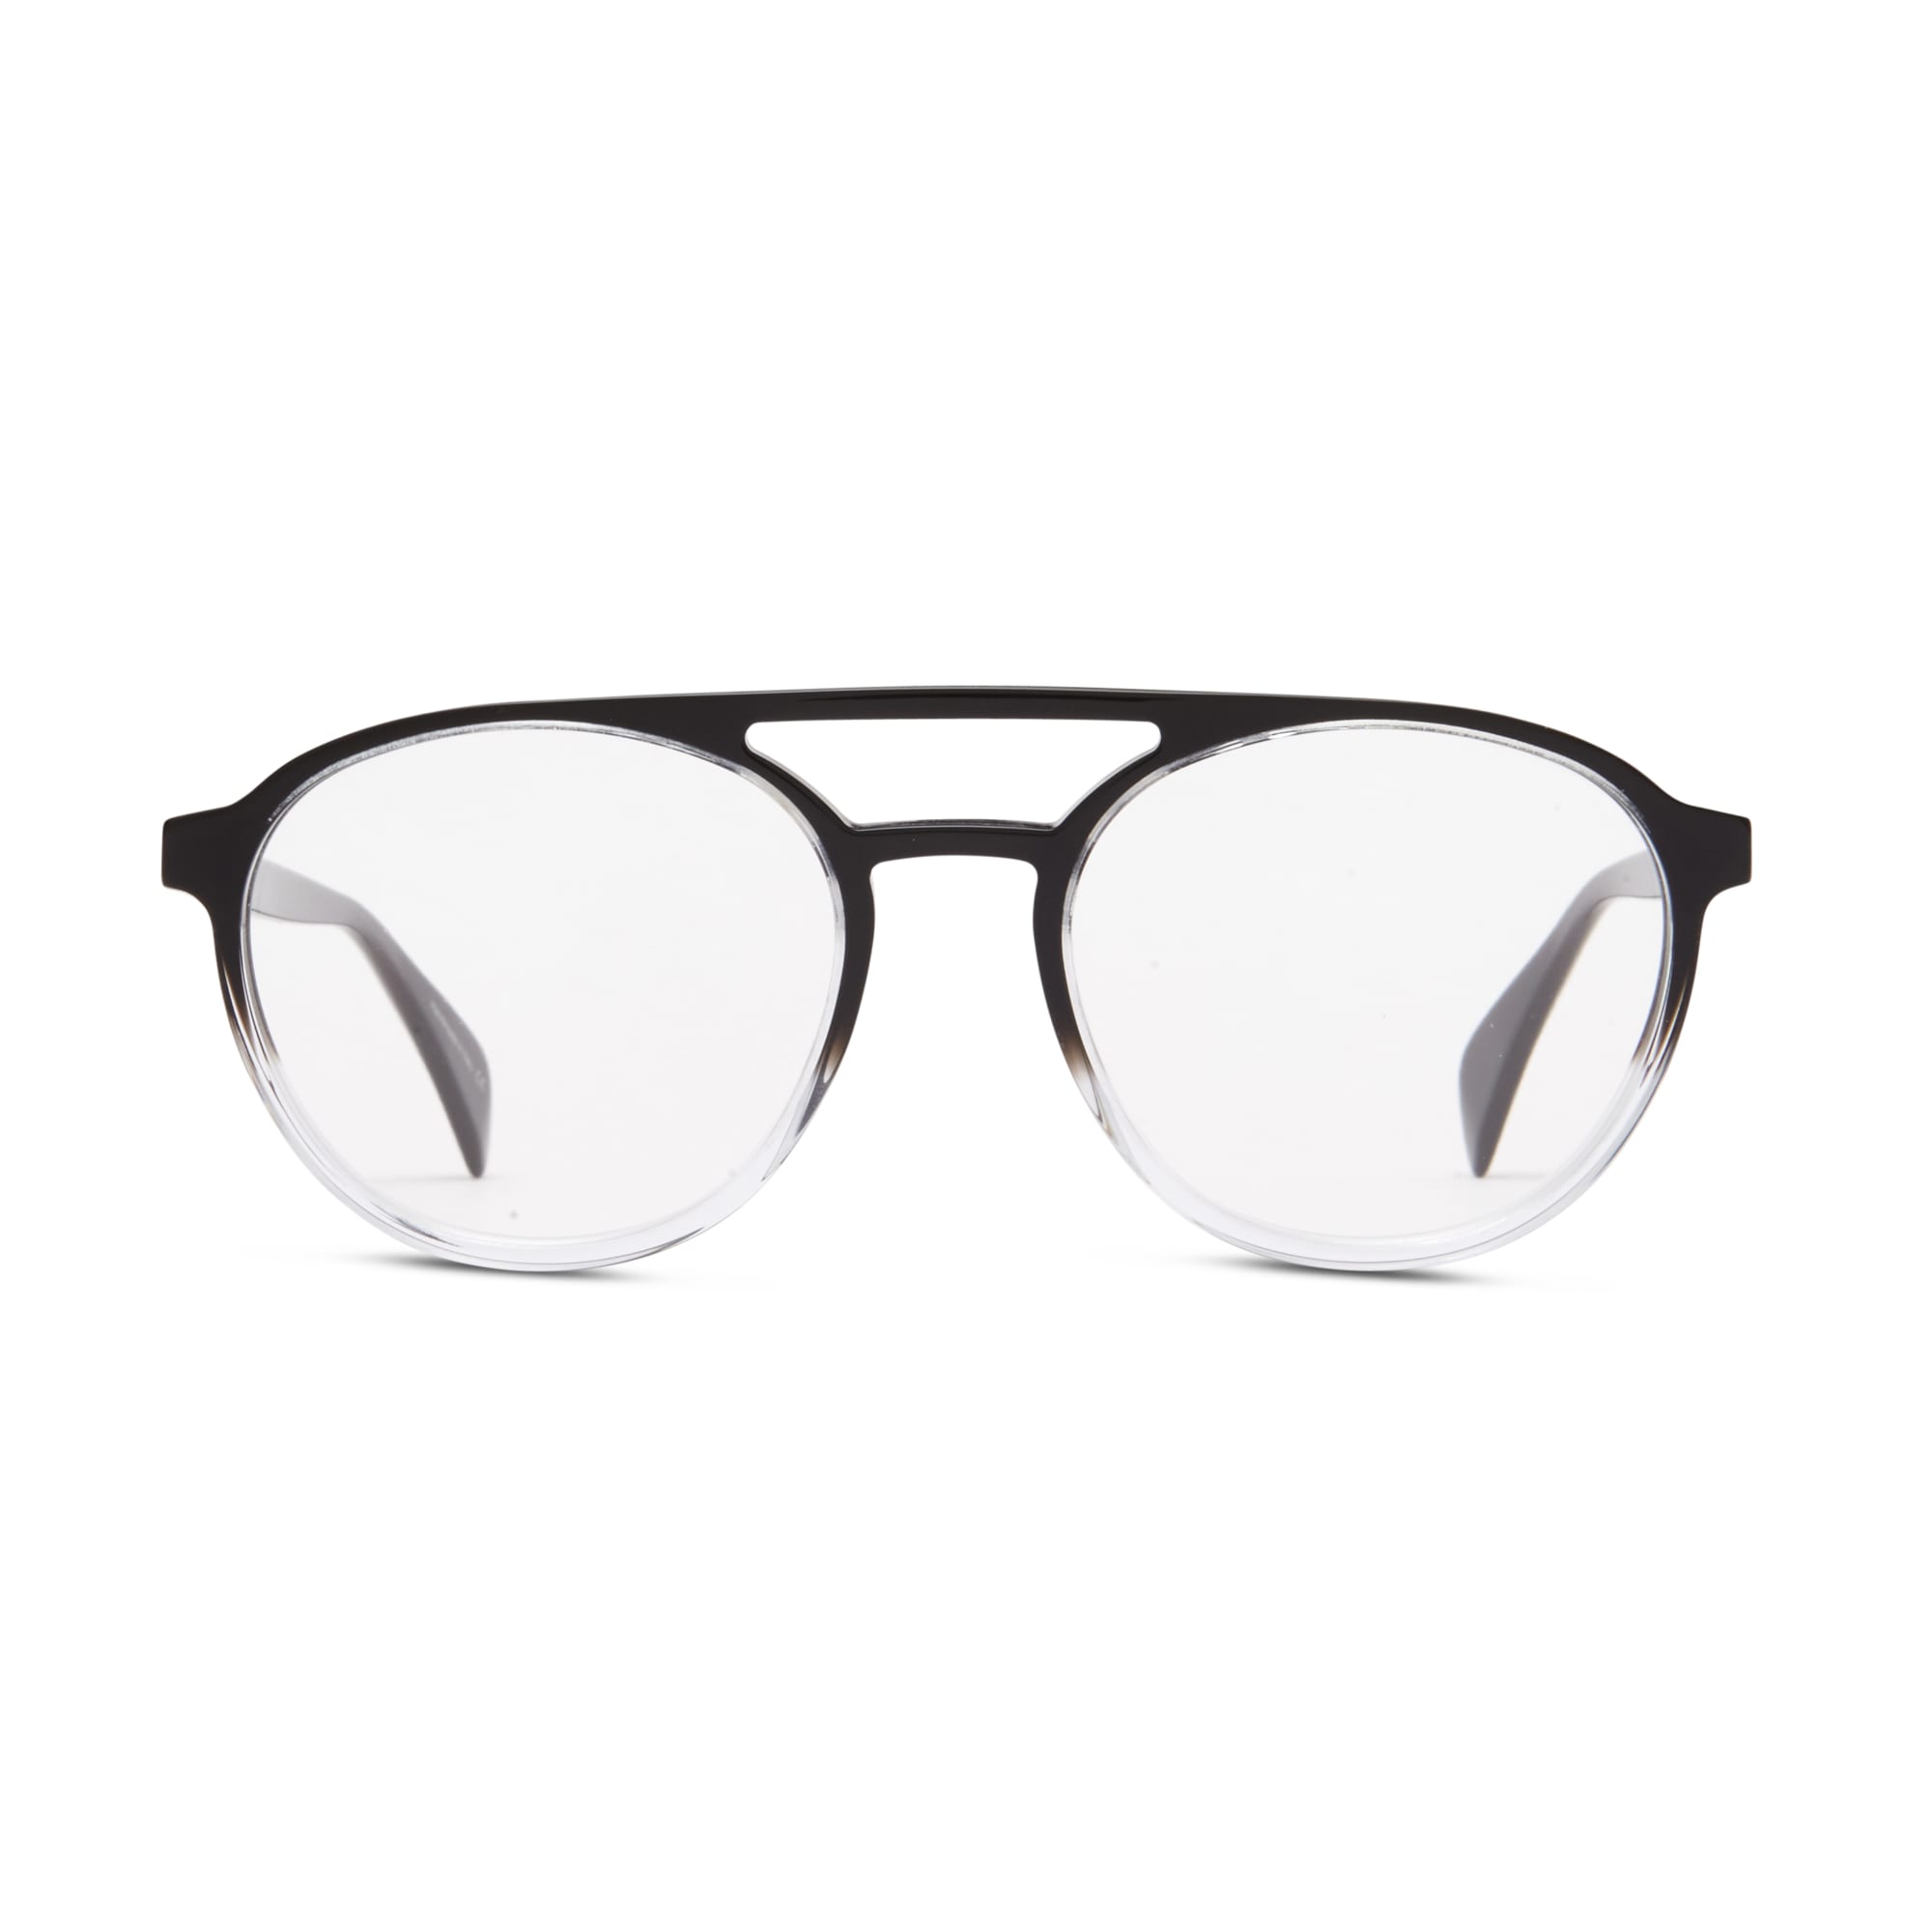 Moko Sunglasses with Black Crystal acetate frame